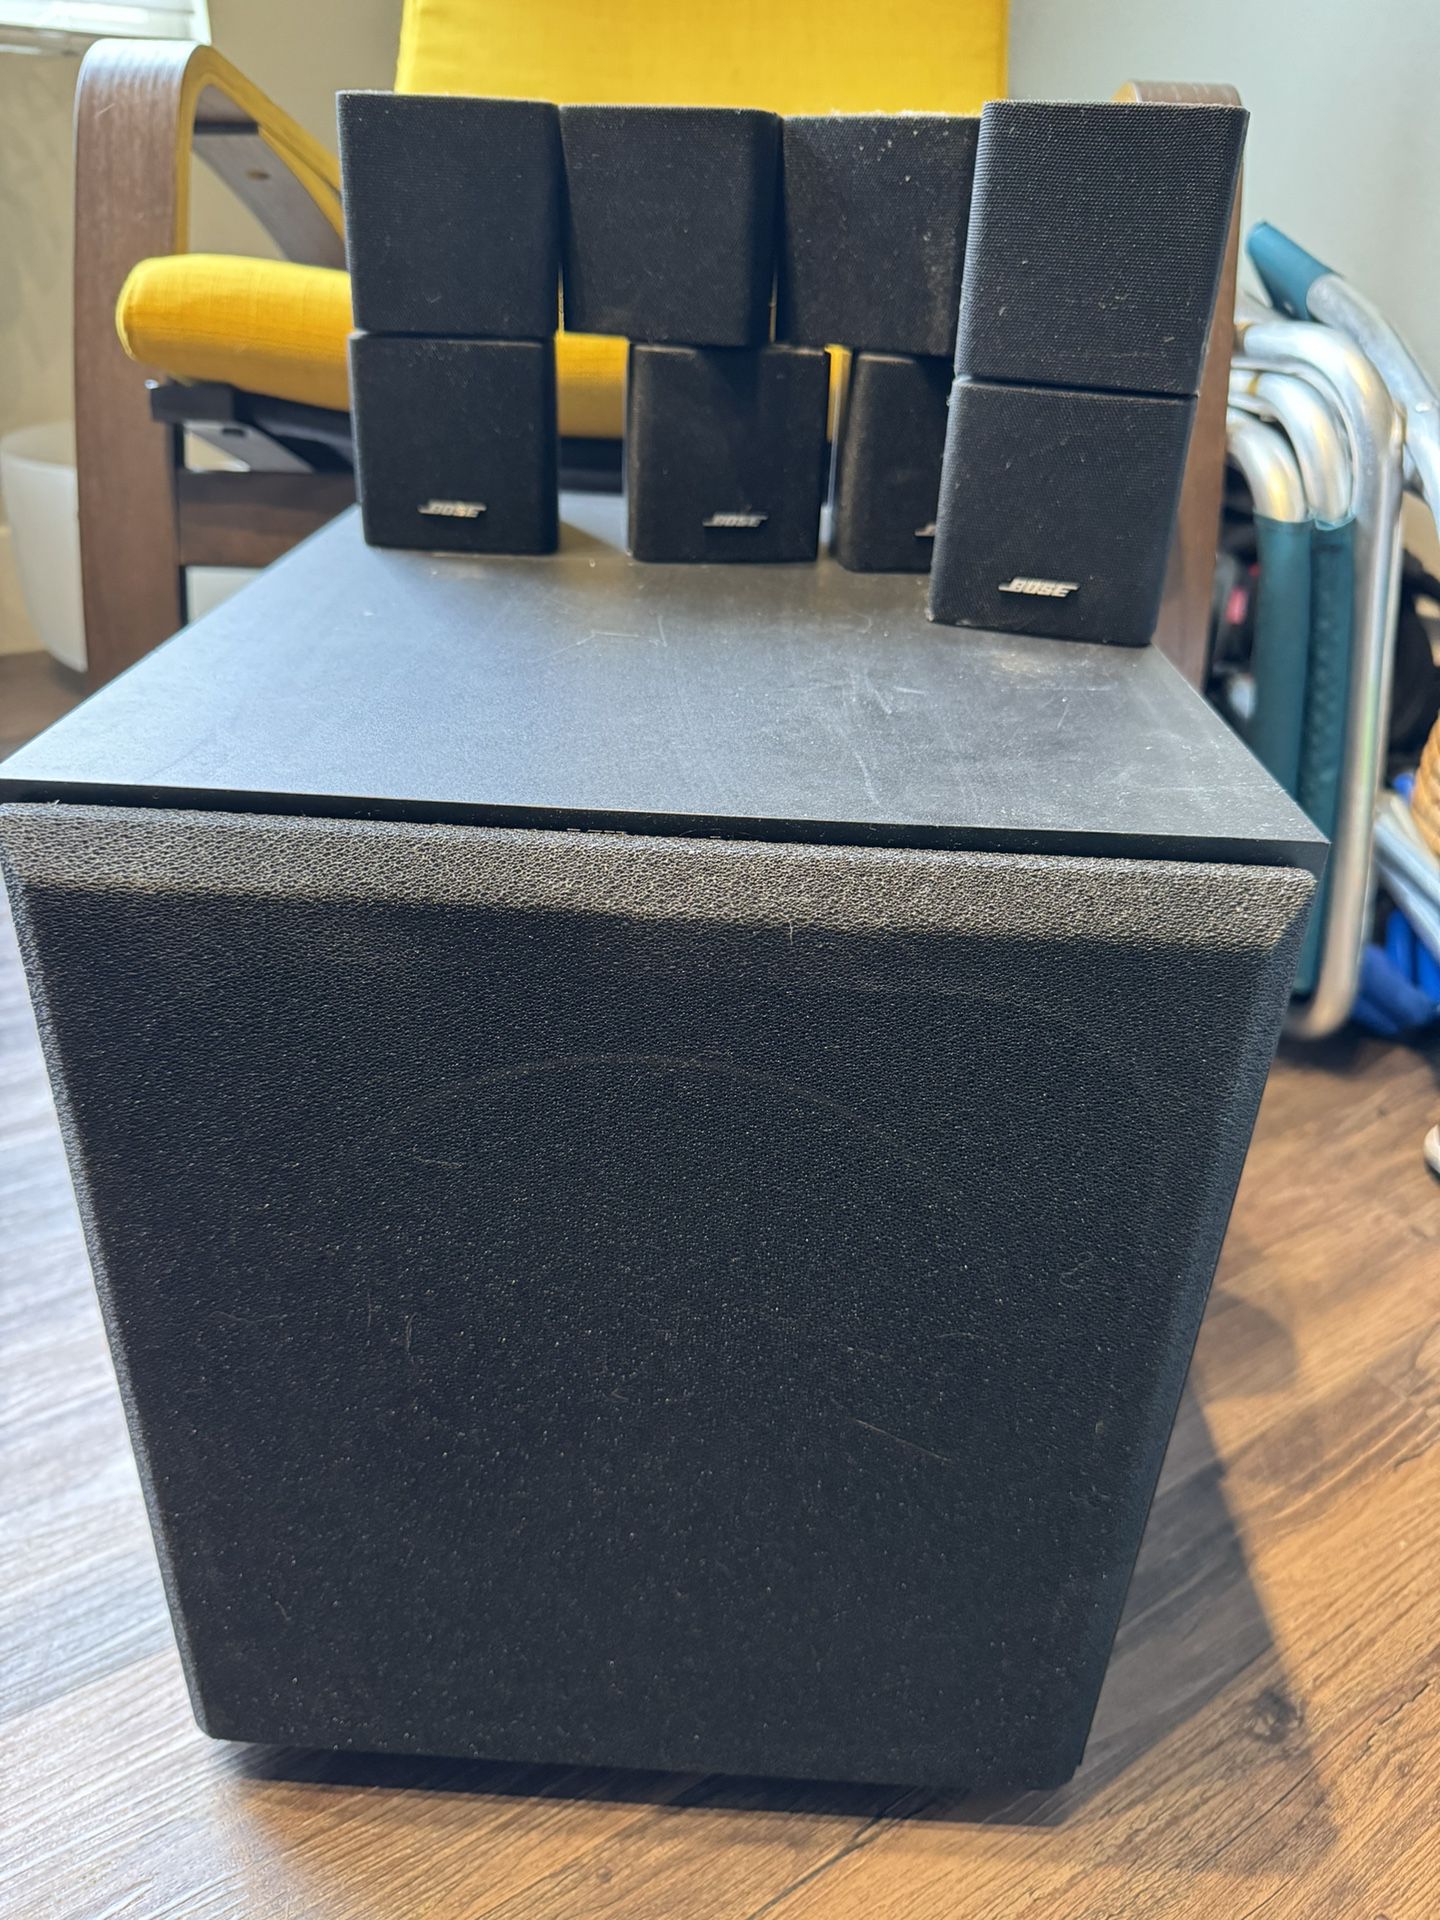 4 Bose Swivel Surround sound Speakers and Klipsch Subwoofer